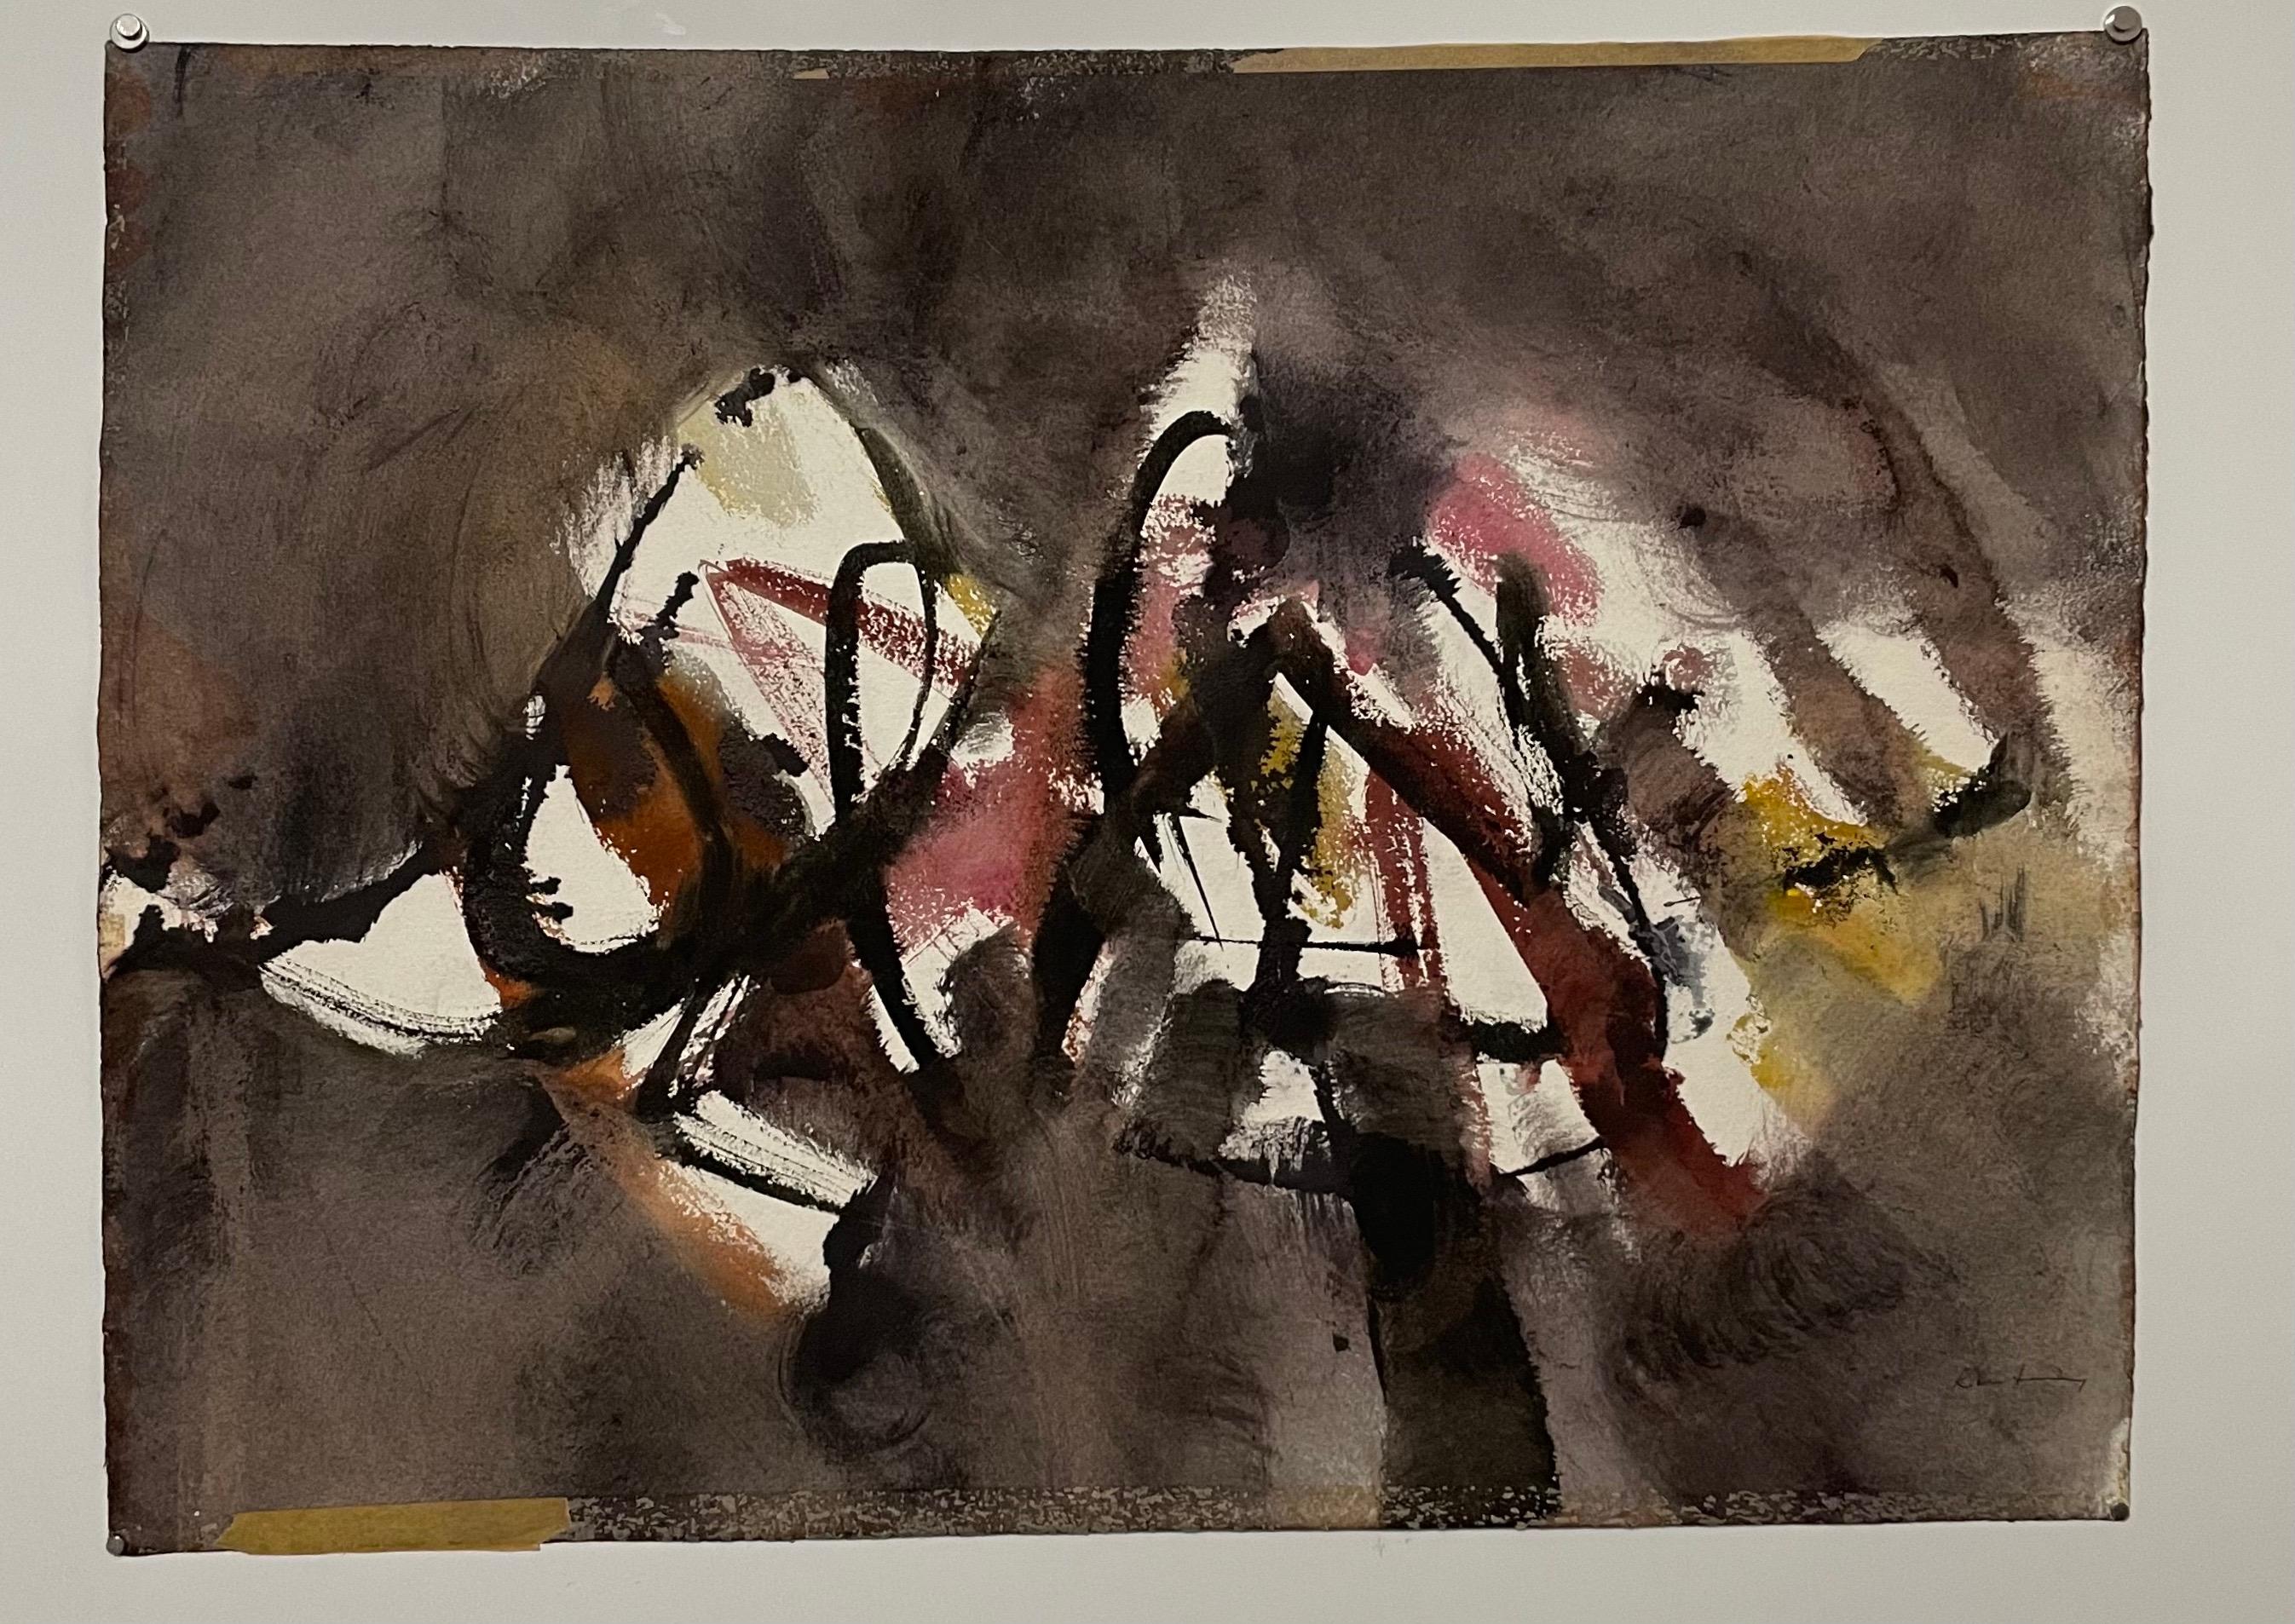 Aquarelle expressionniste abstraite moderniste du Bauhaus Weimar  - Painting de Pawel Kontny